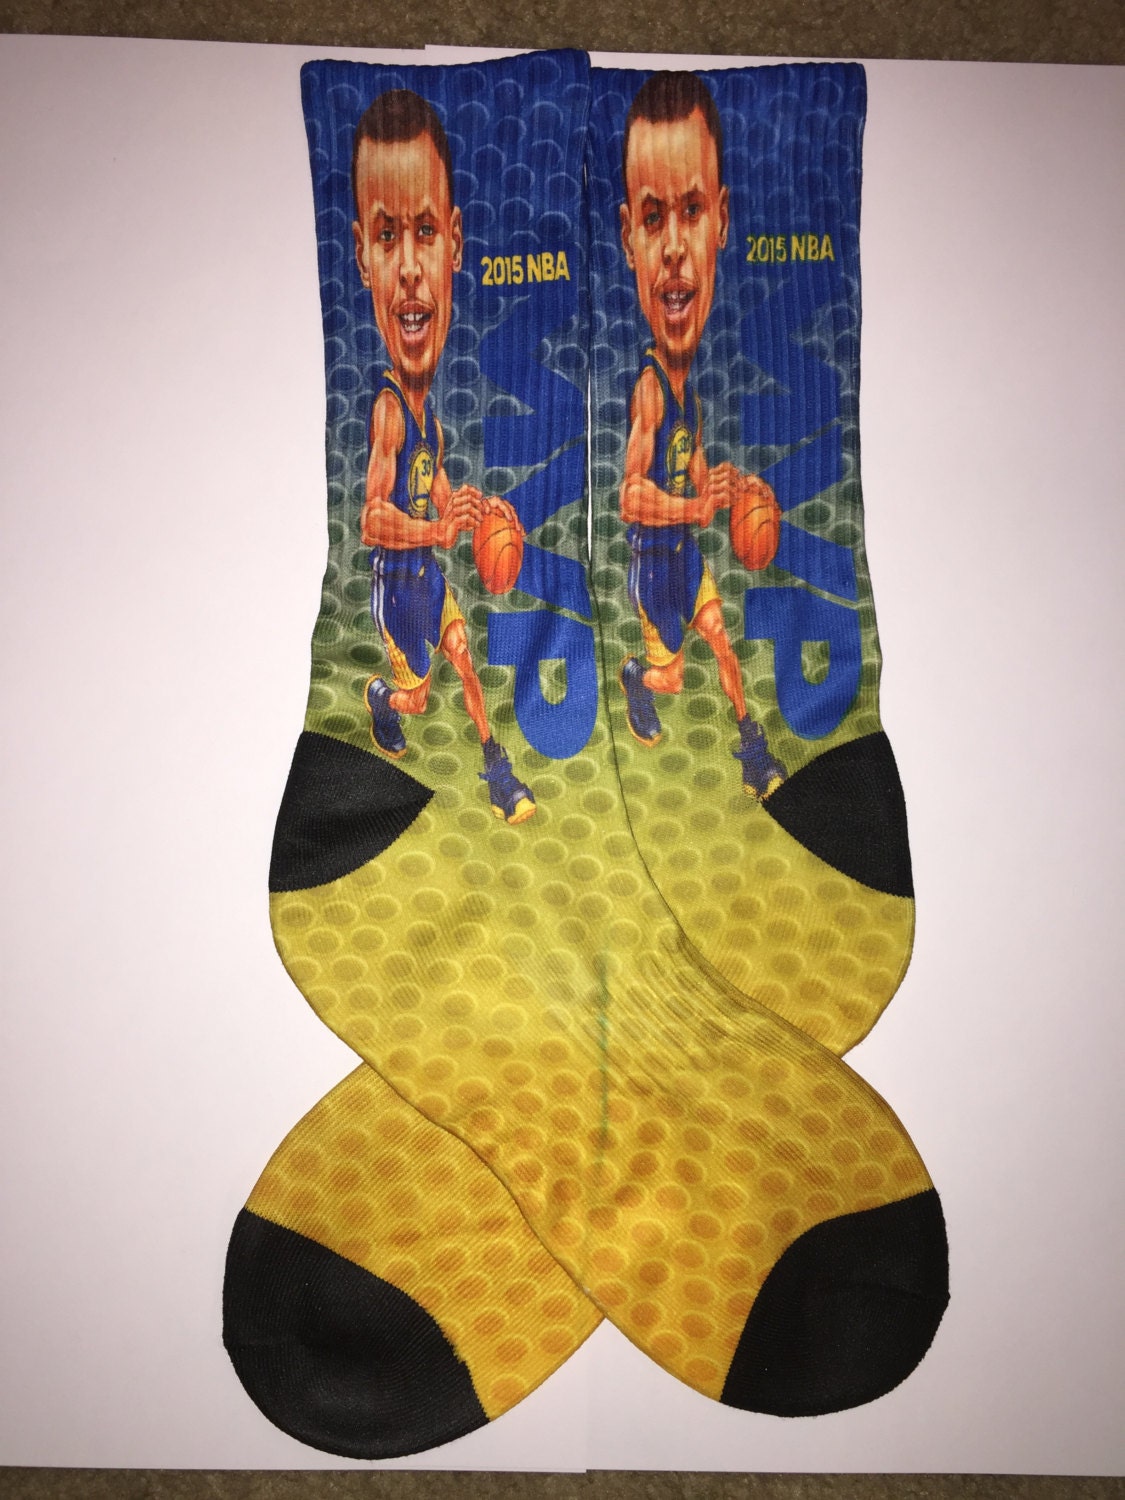 Curry 2015 MVP Custom Socks by ClubDyePrinting on Etsy